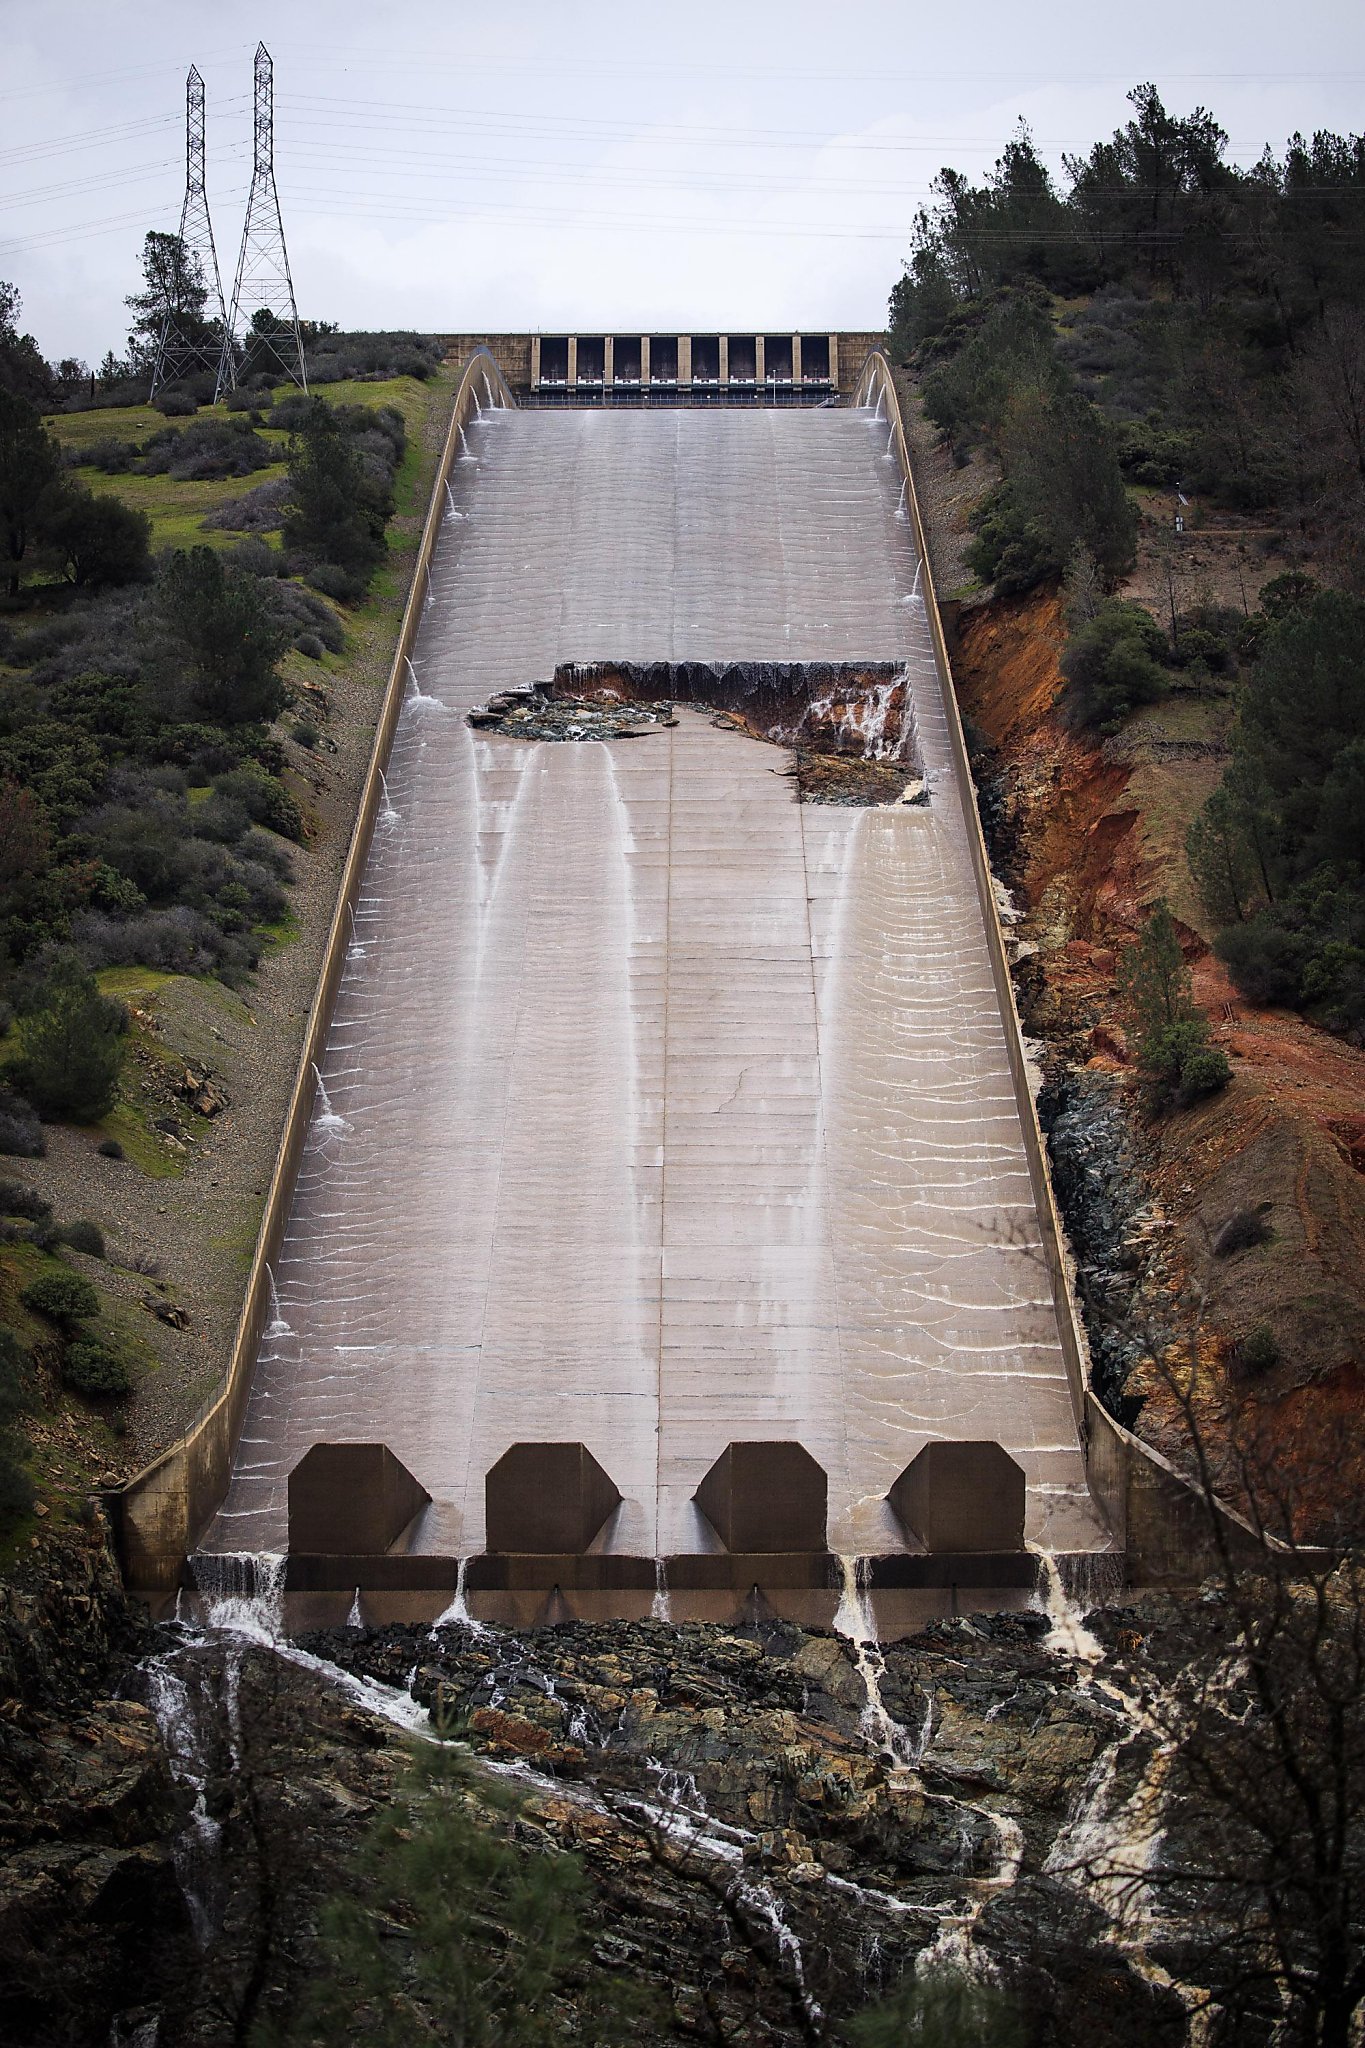 Even after Oroville near-disaster, California dams remain potentially hazardous - San Francisco Chronicle